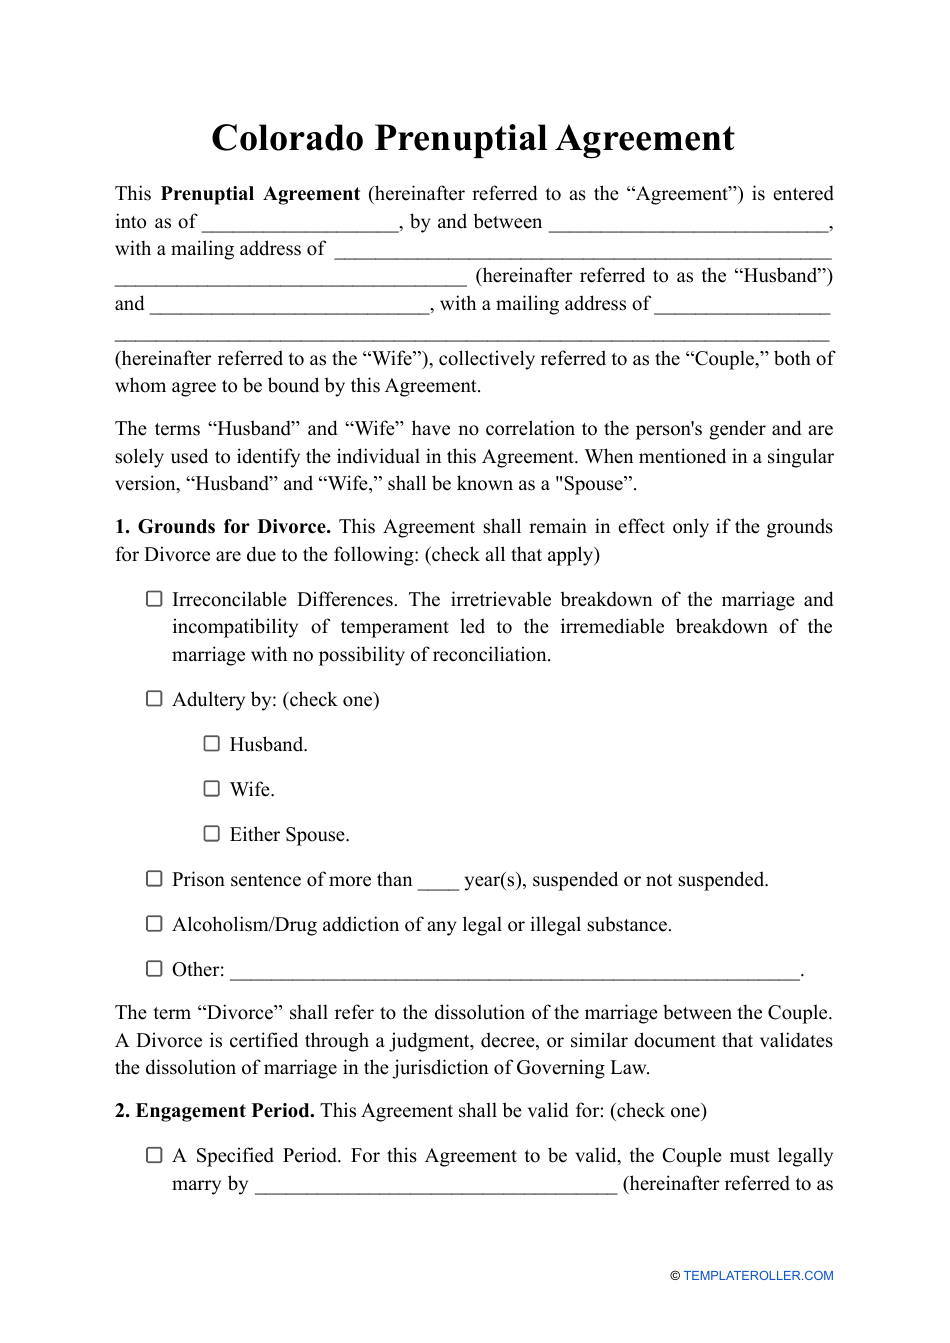 Prenuptial Agreement Template - Colorado, Page 1